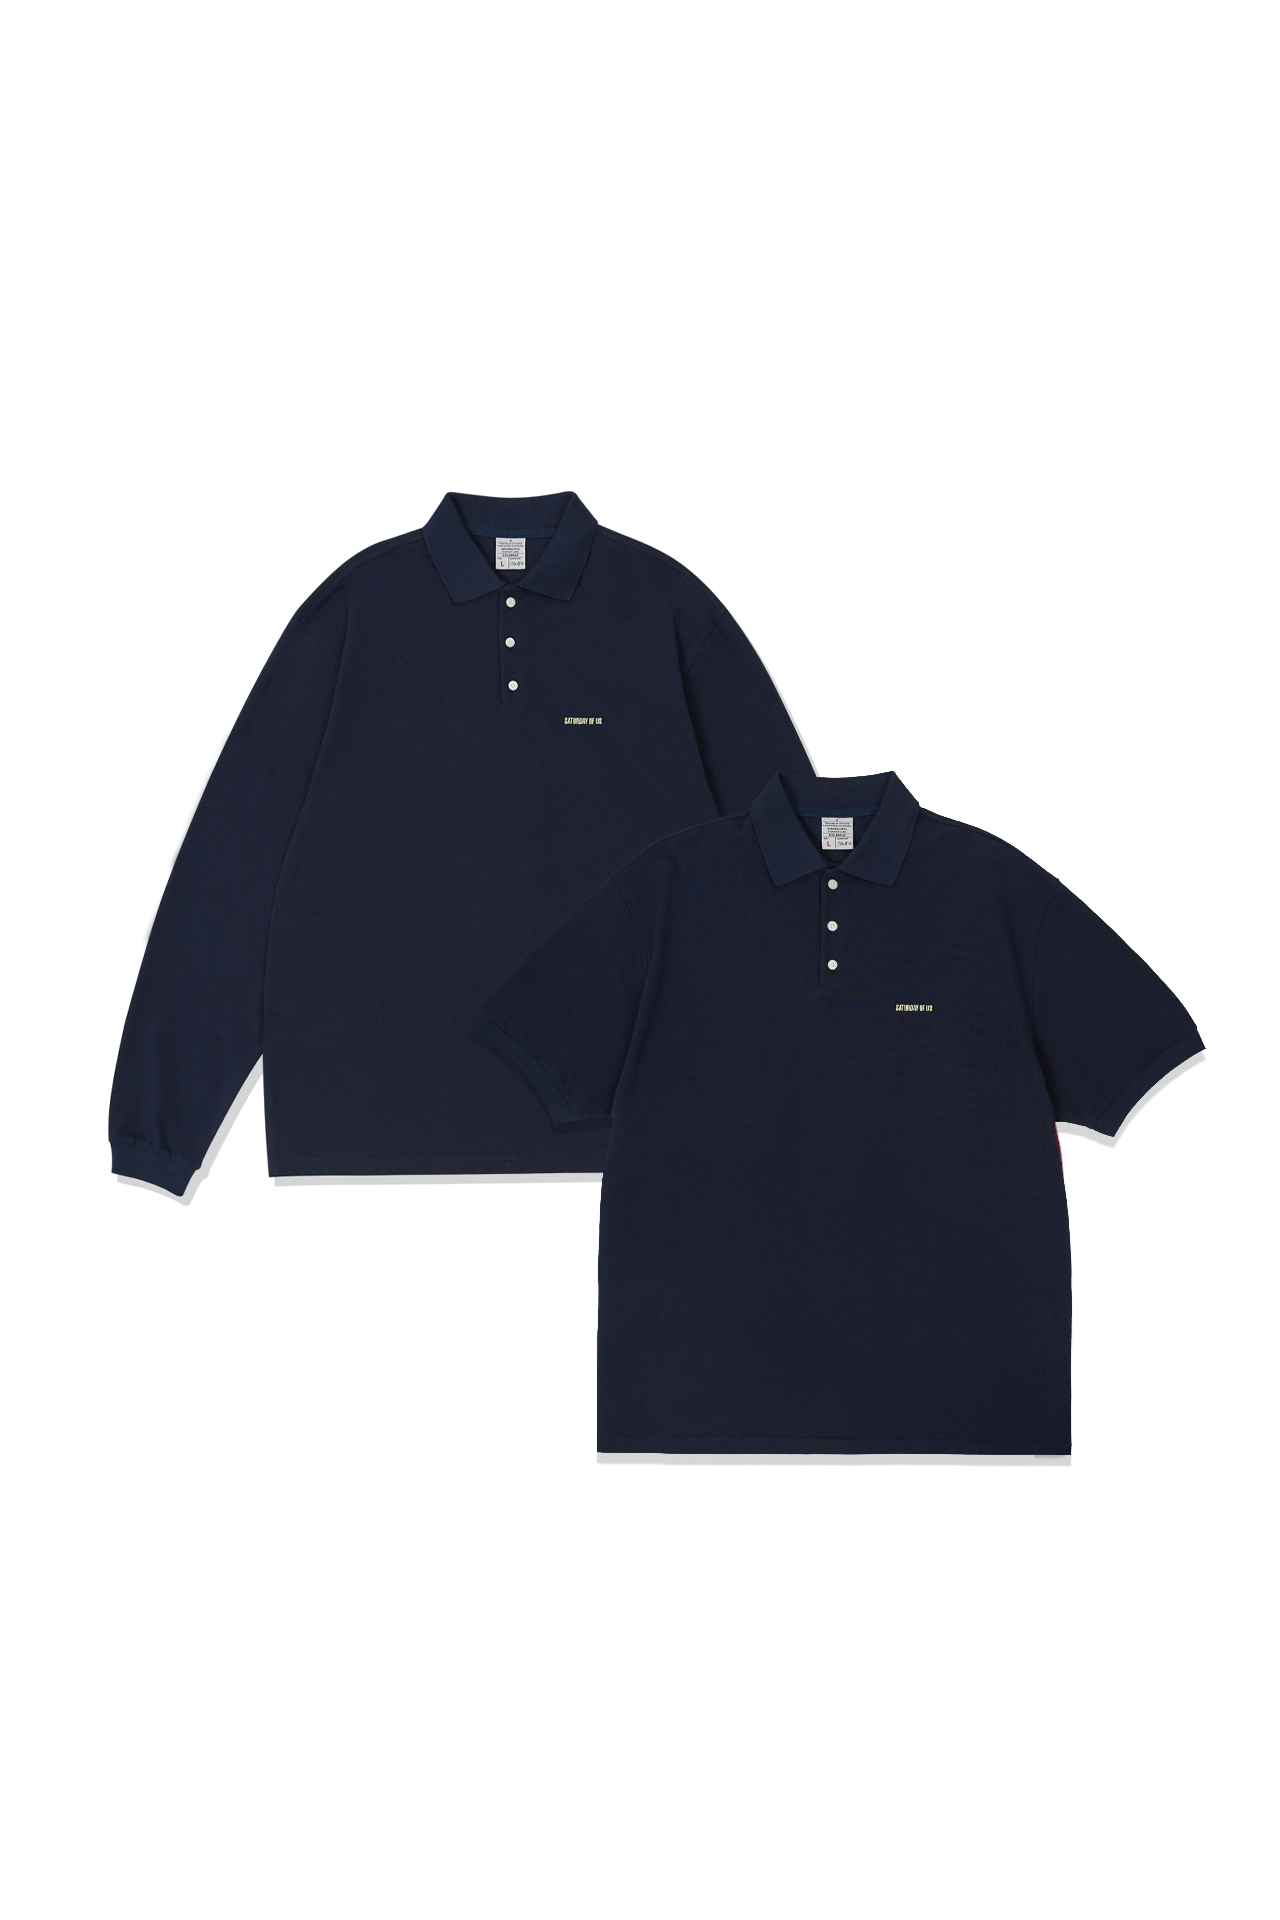 Layered PK Polo Shirt Navy (Short Sleeve, Long Sleeve Set)